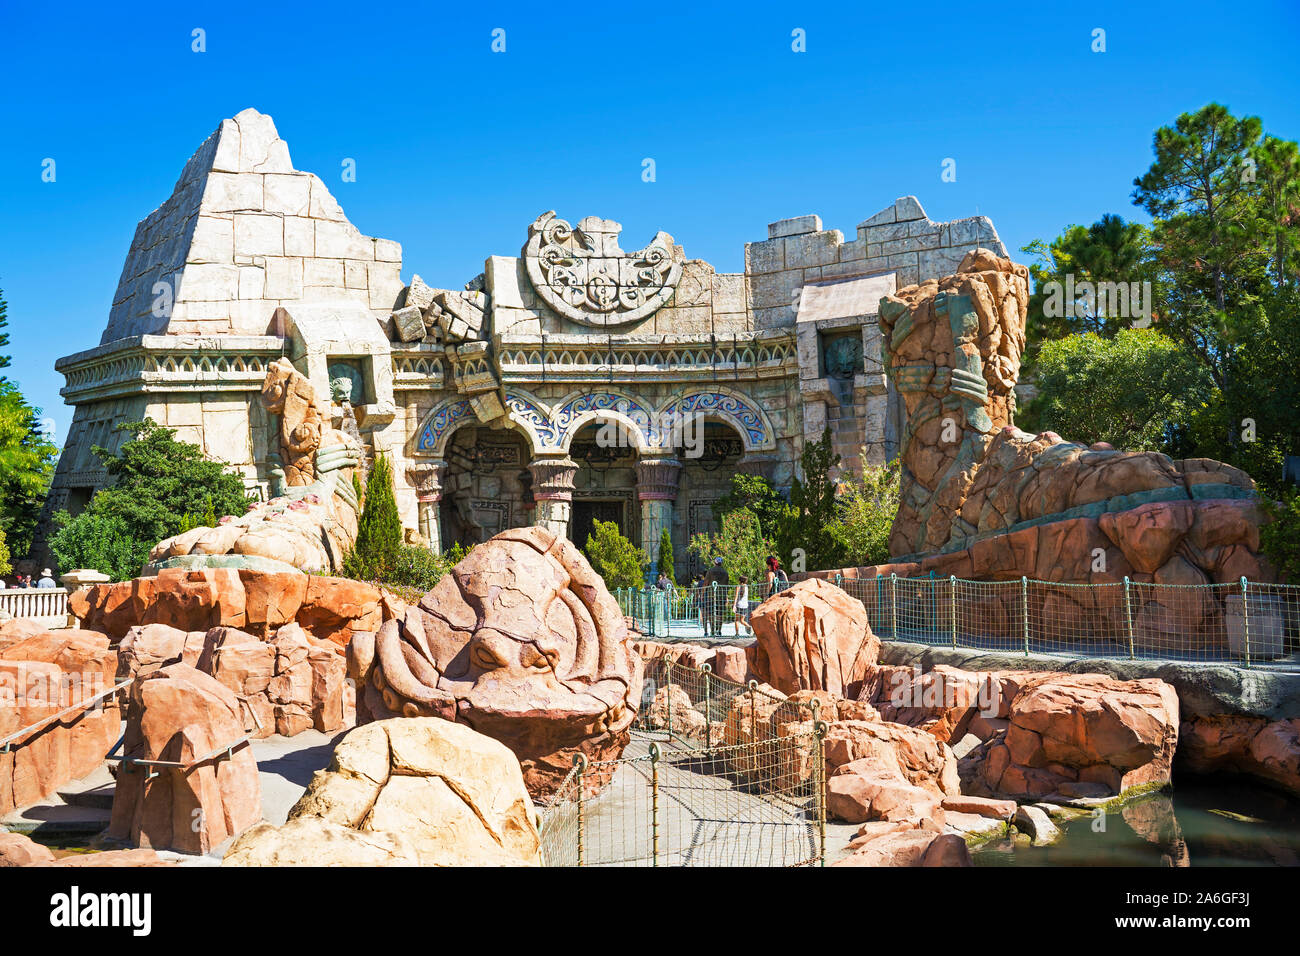 Poseidon's Fury Attraktion, Show, der verlorene Kontinent, Insel der Abenteuer, Universal Studios Resort, Orlando, Florida, USA Stockfoto